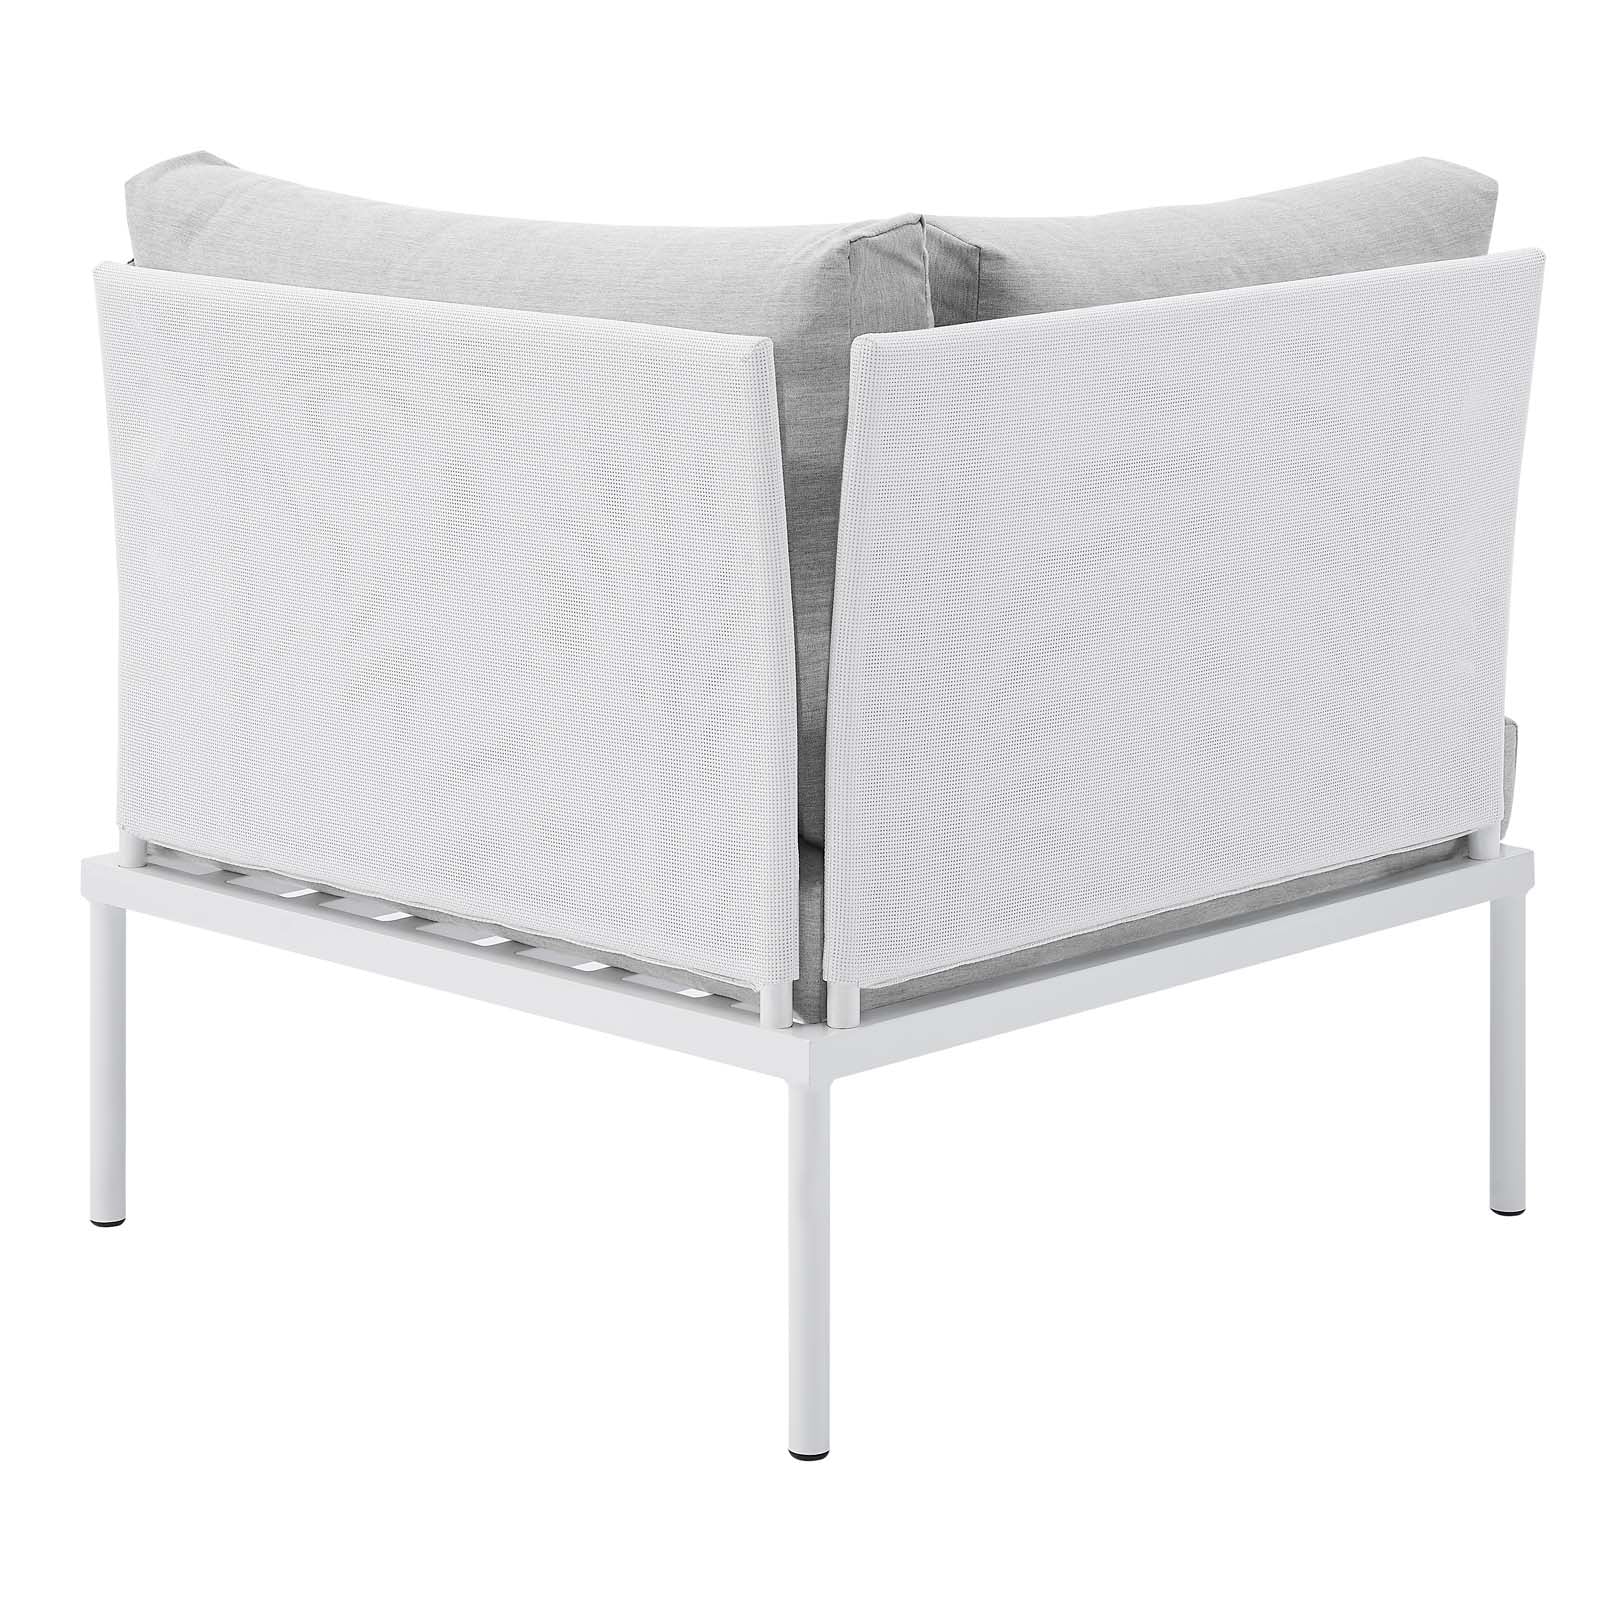 Modway Outdoor Conversation Sets - Harmony 6 Piece Sunbrella Outdoor Patio Aluminum Sectional Sofa Set White Gray